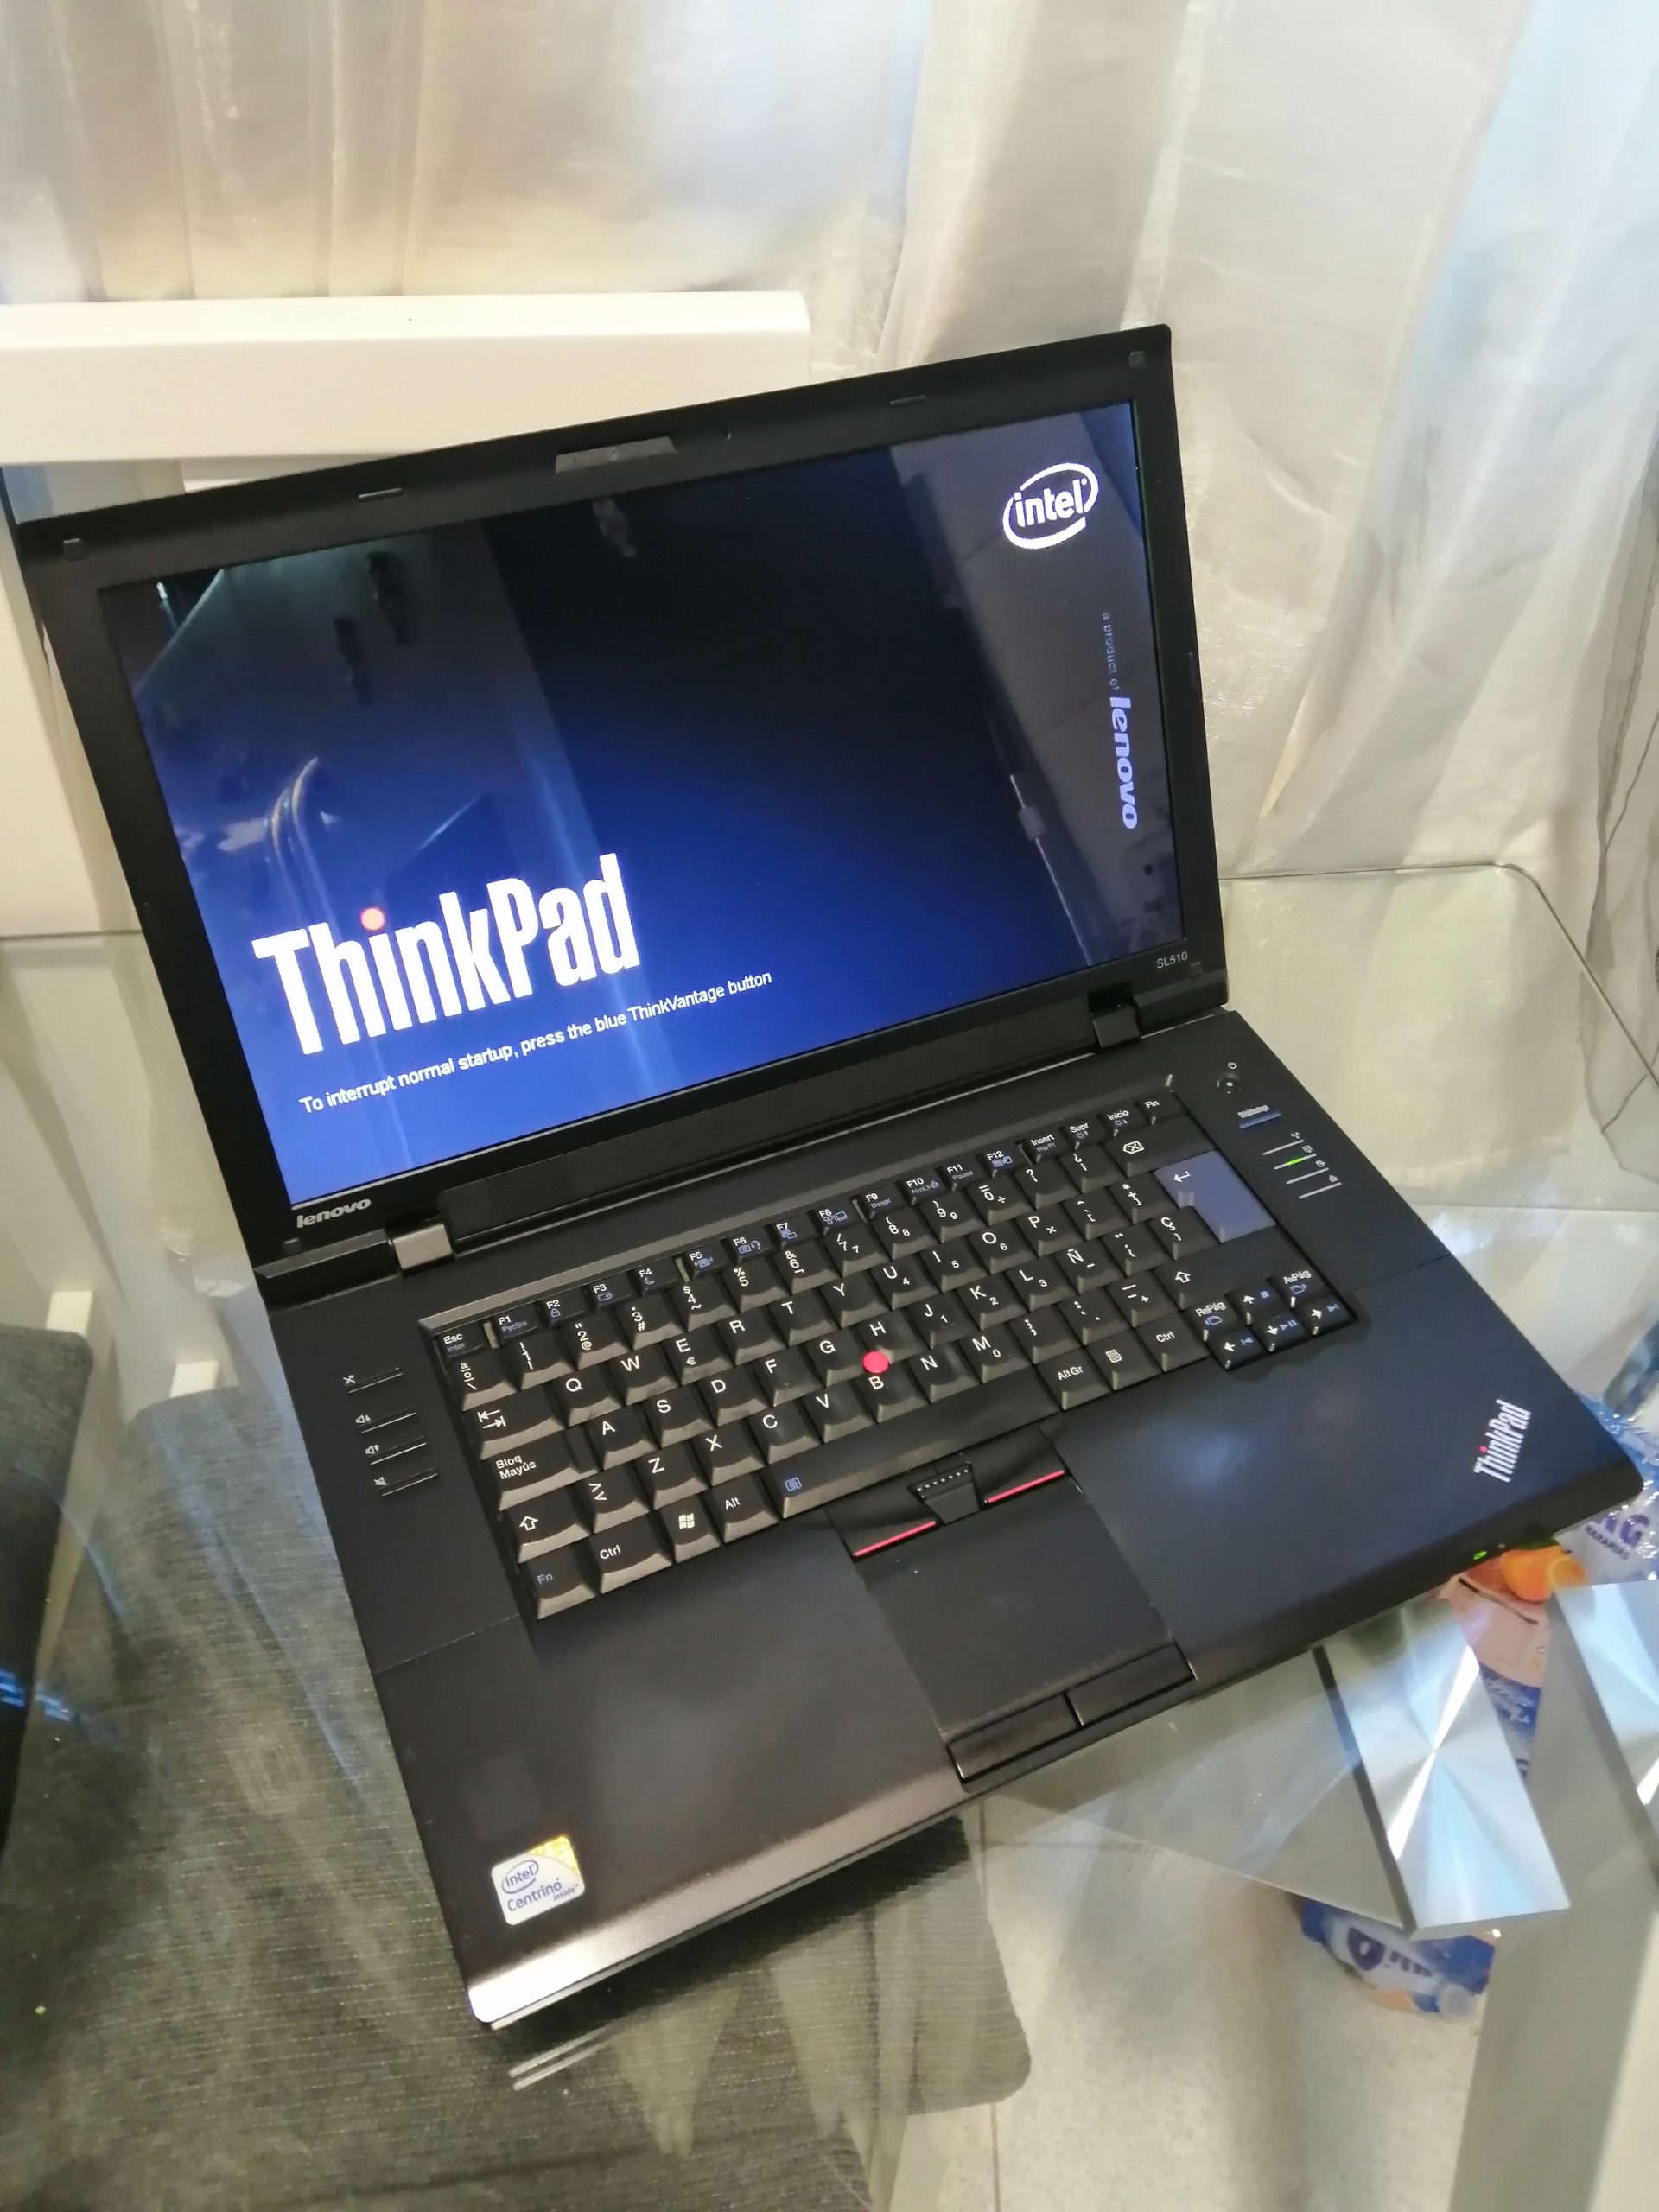 Lenovo Sl510 Thinkpad Intel Centrino Todo Chollos Informatica